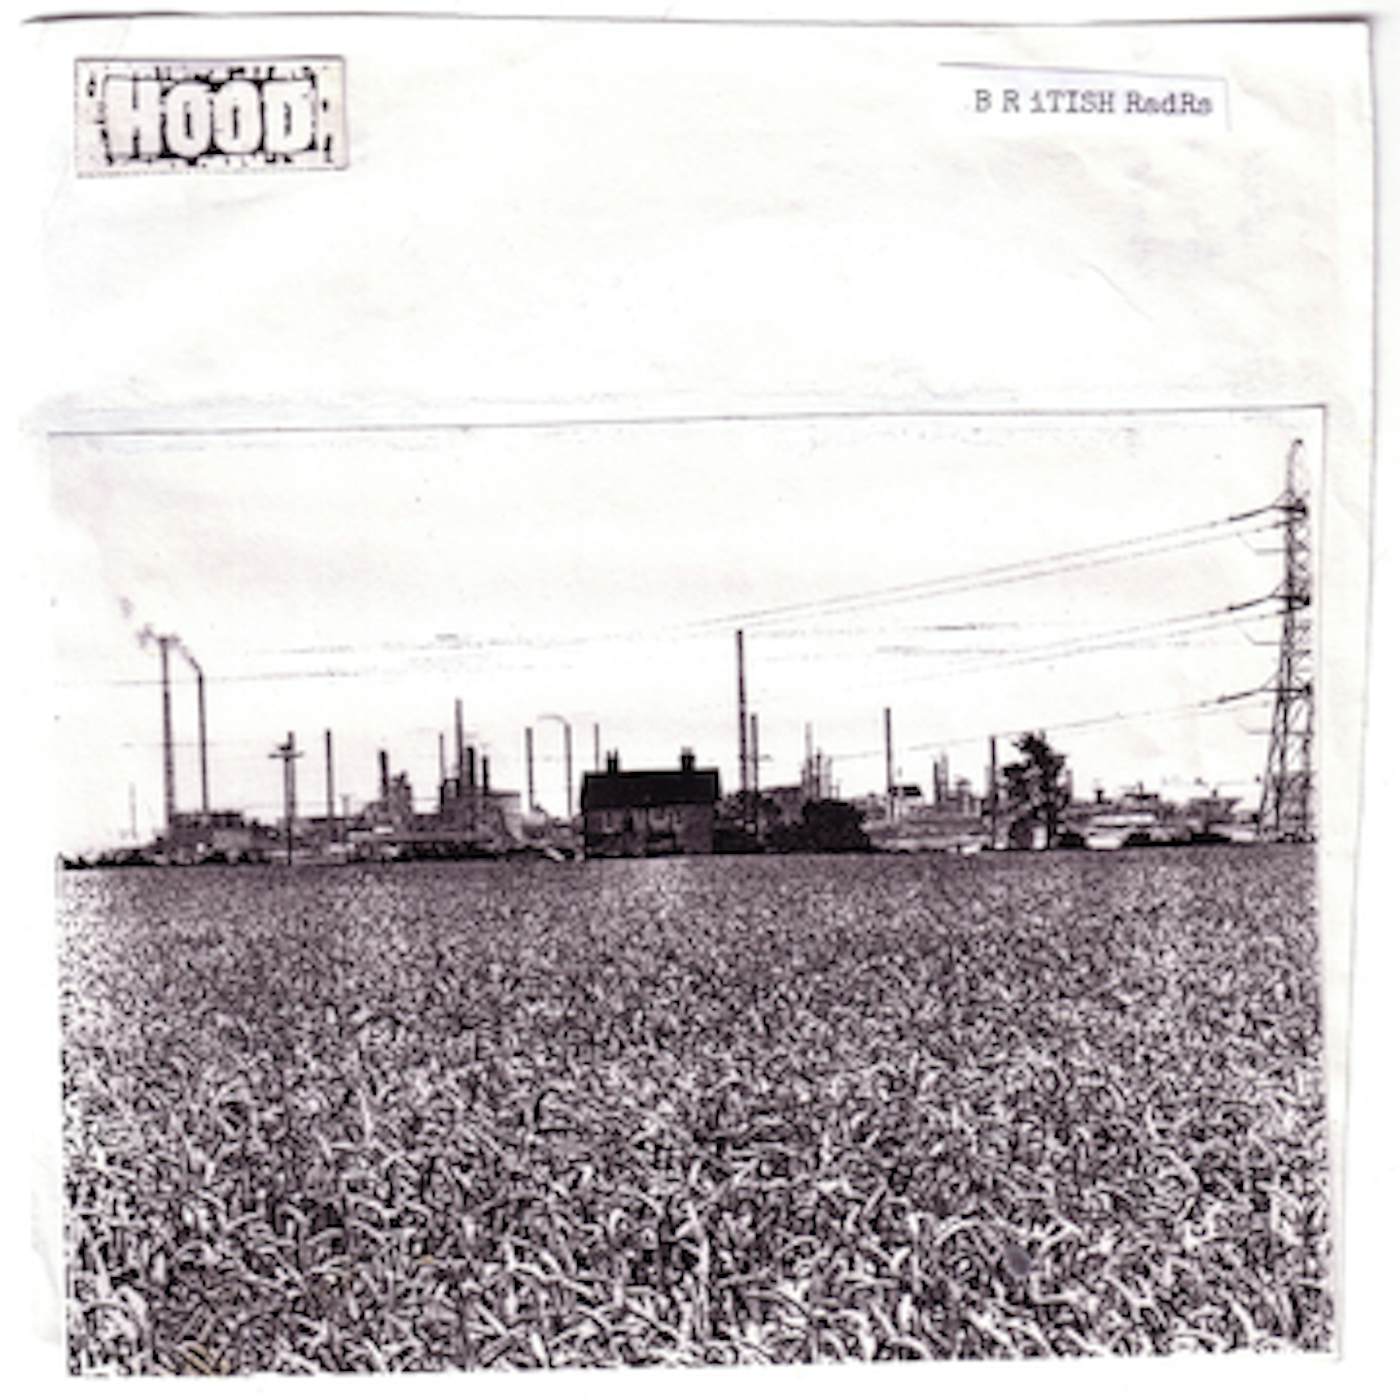 Hood British Radars Vinyl Record